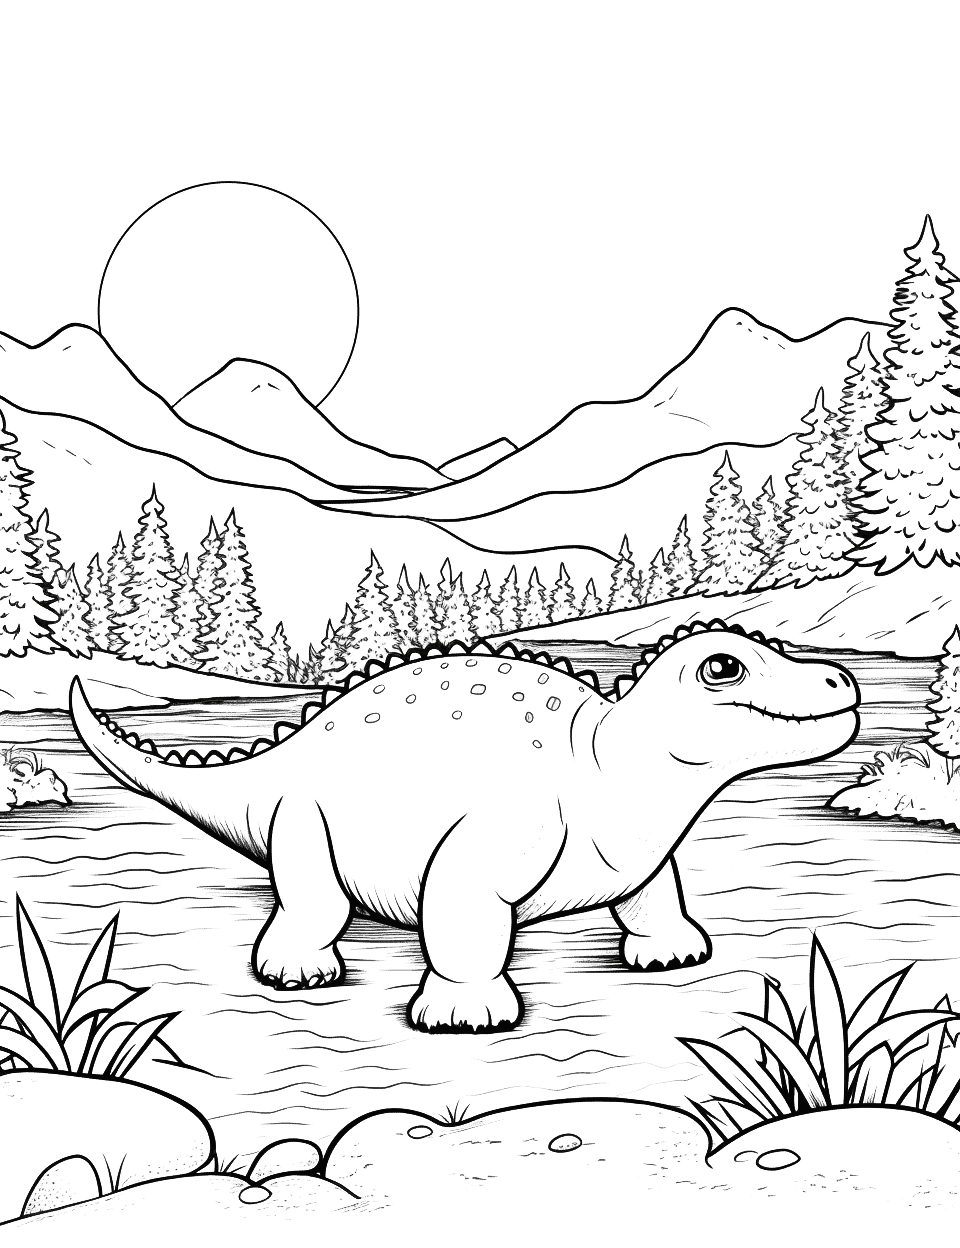 Ankylosaurus Crossing a River Dinosaur Coloring Page - An Ankylosaurus and its baby crossing a prehistoric river.